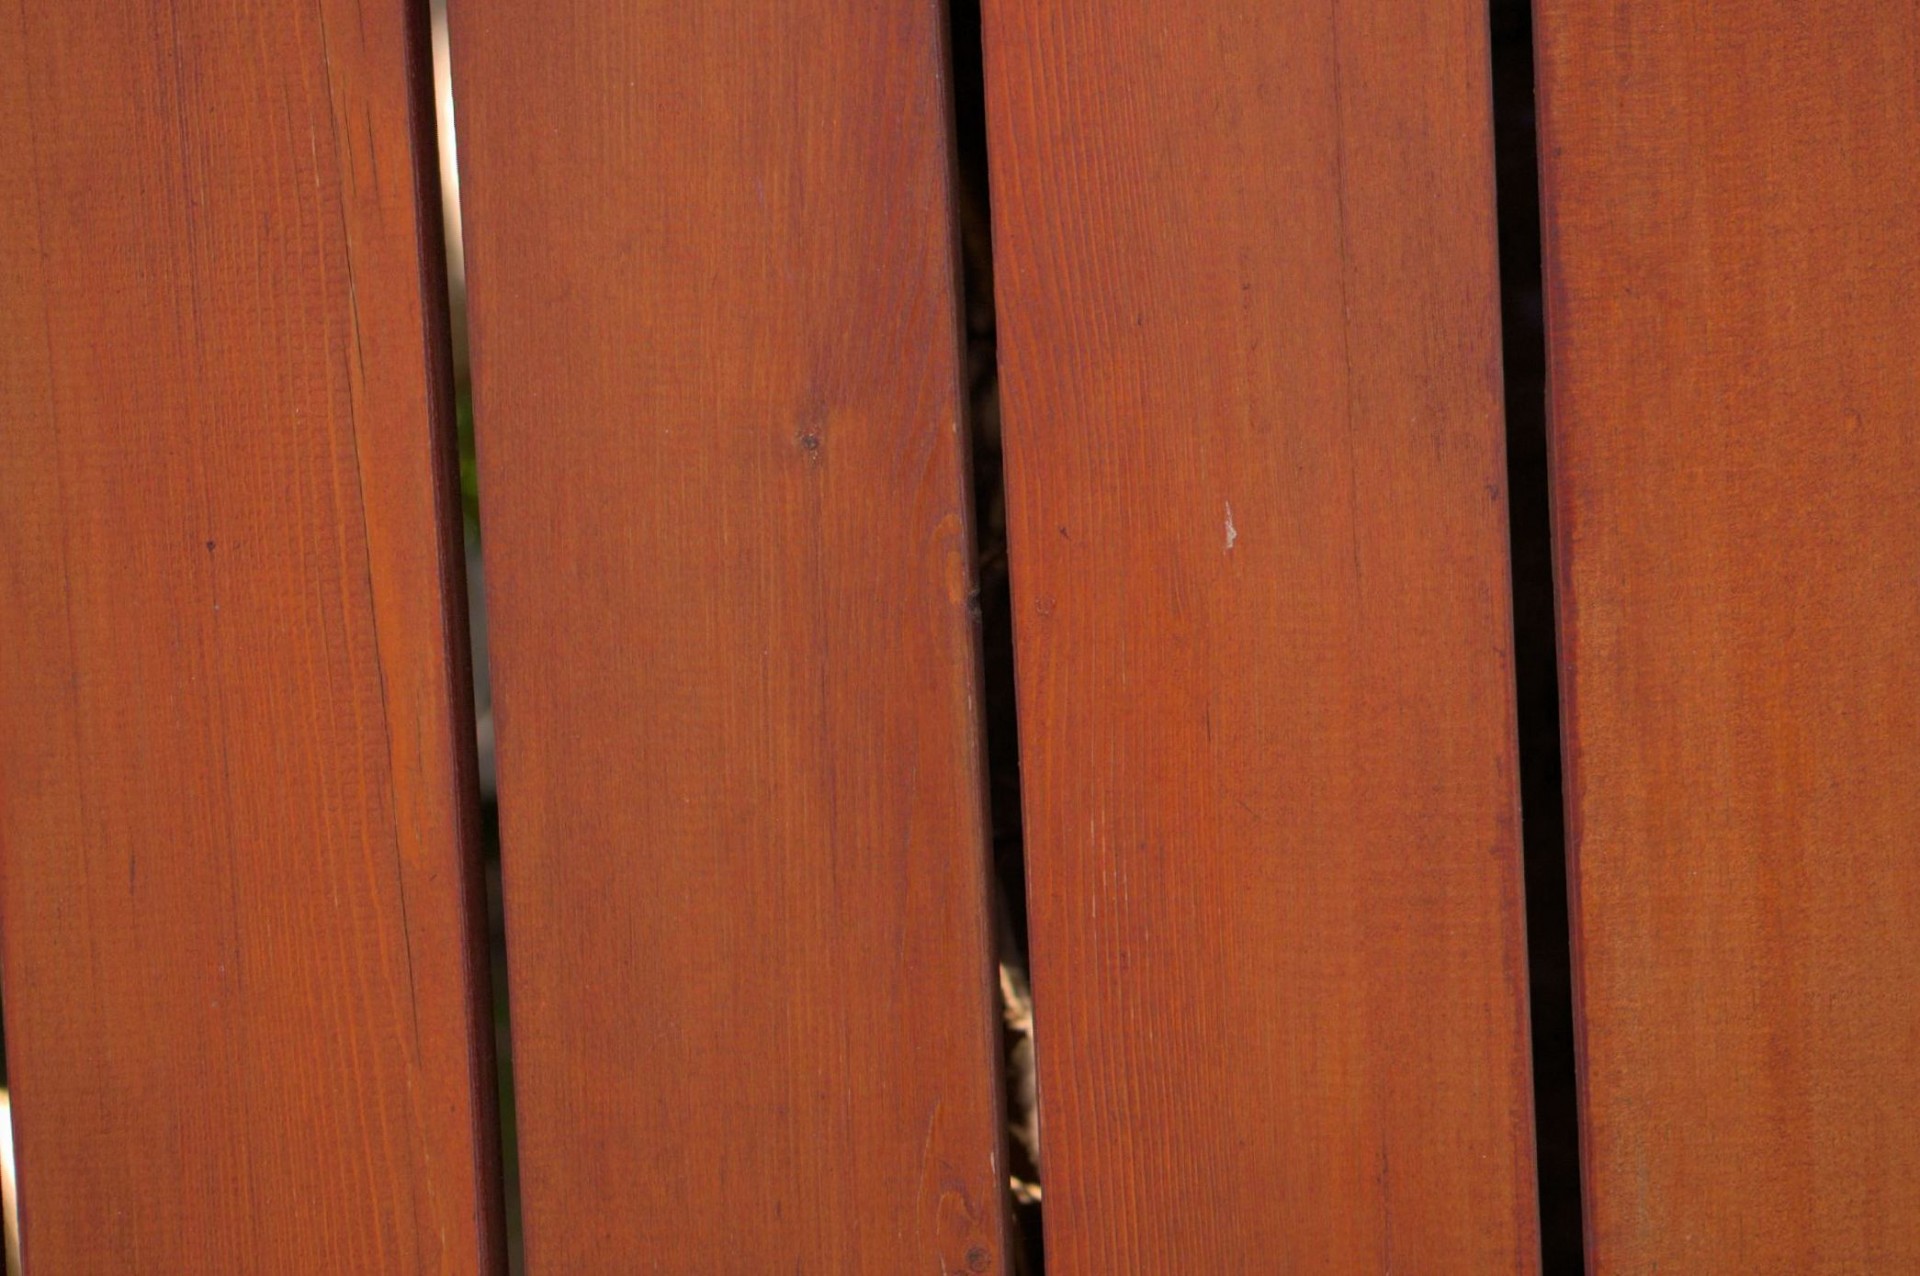 wooden fence background free photo